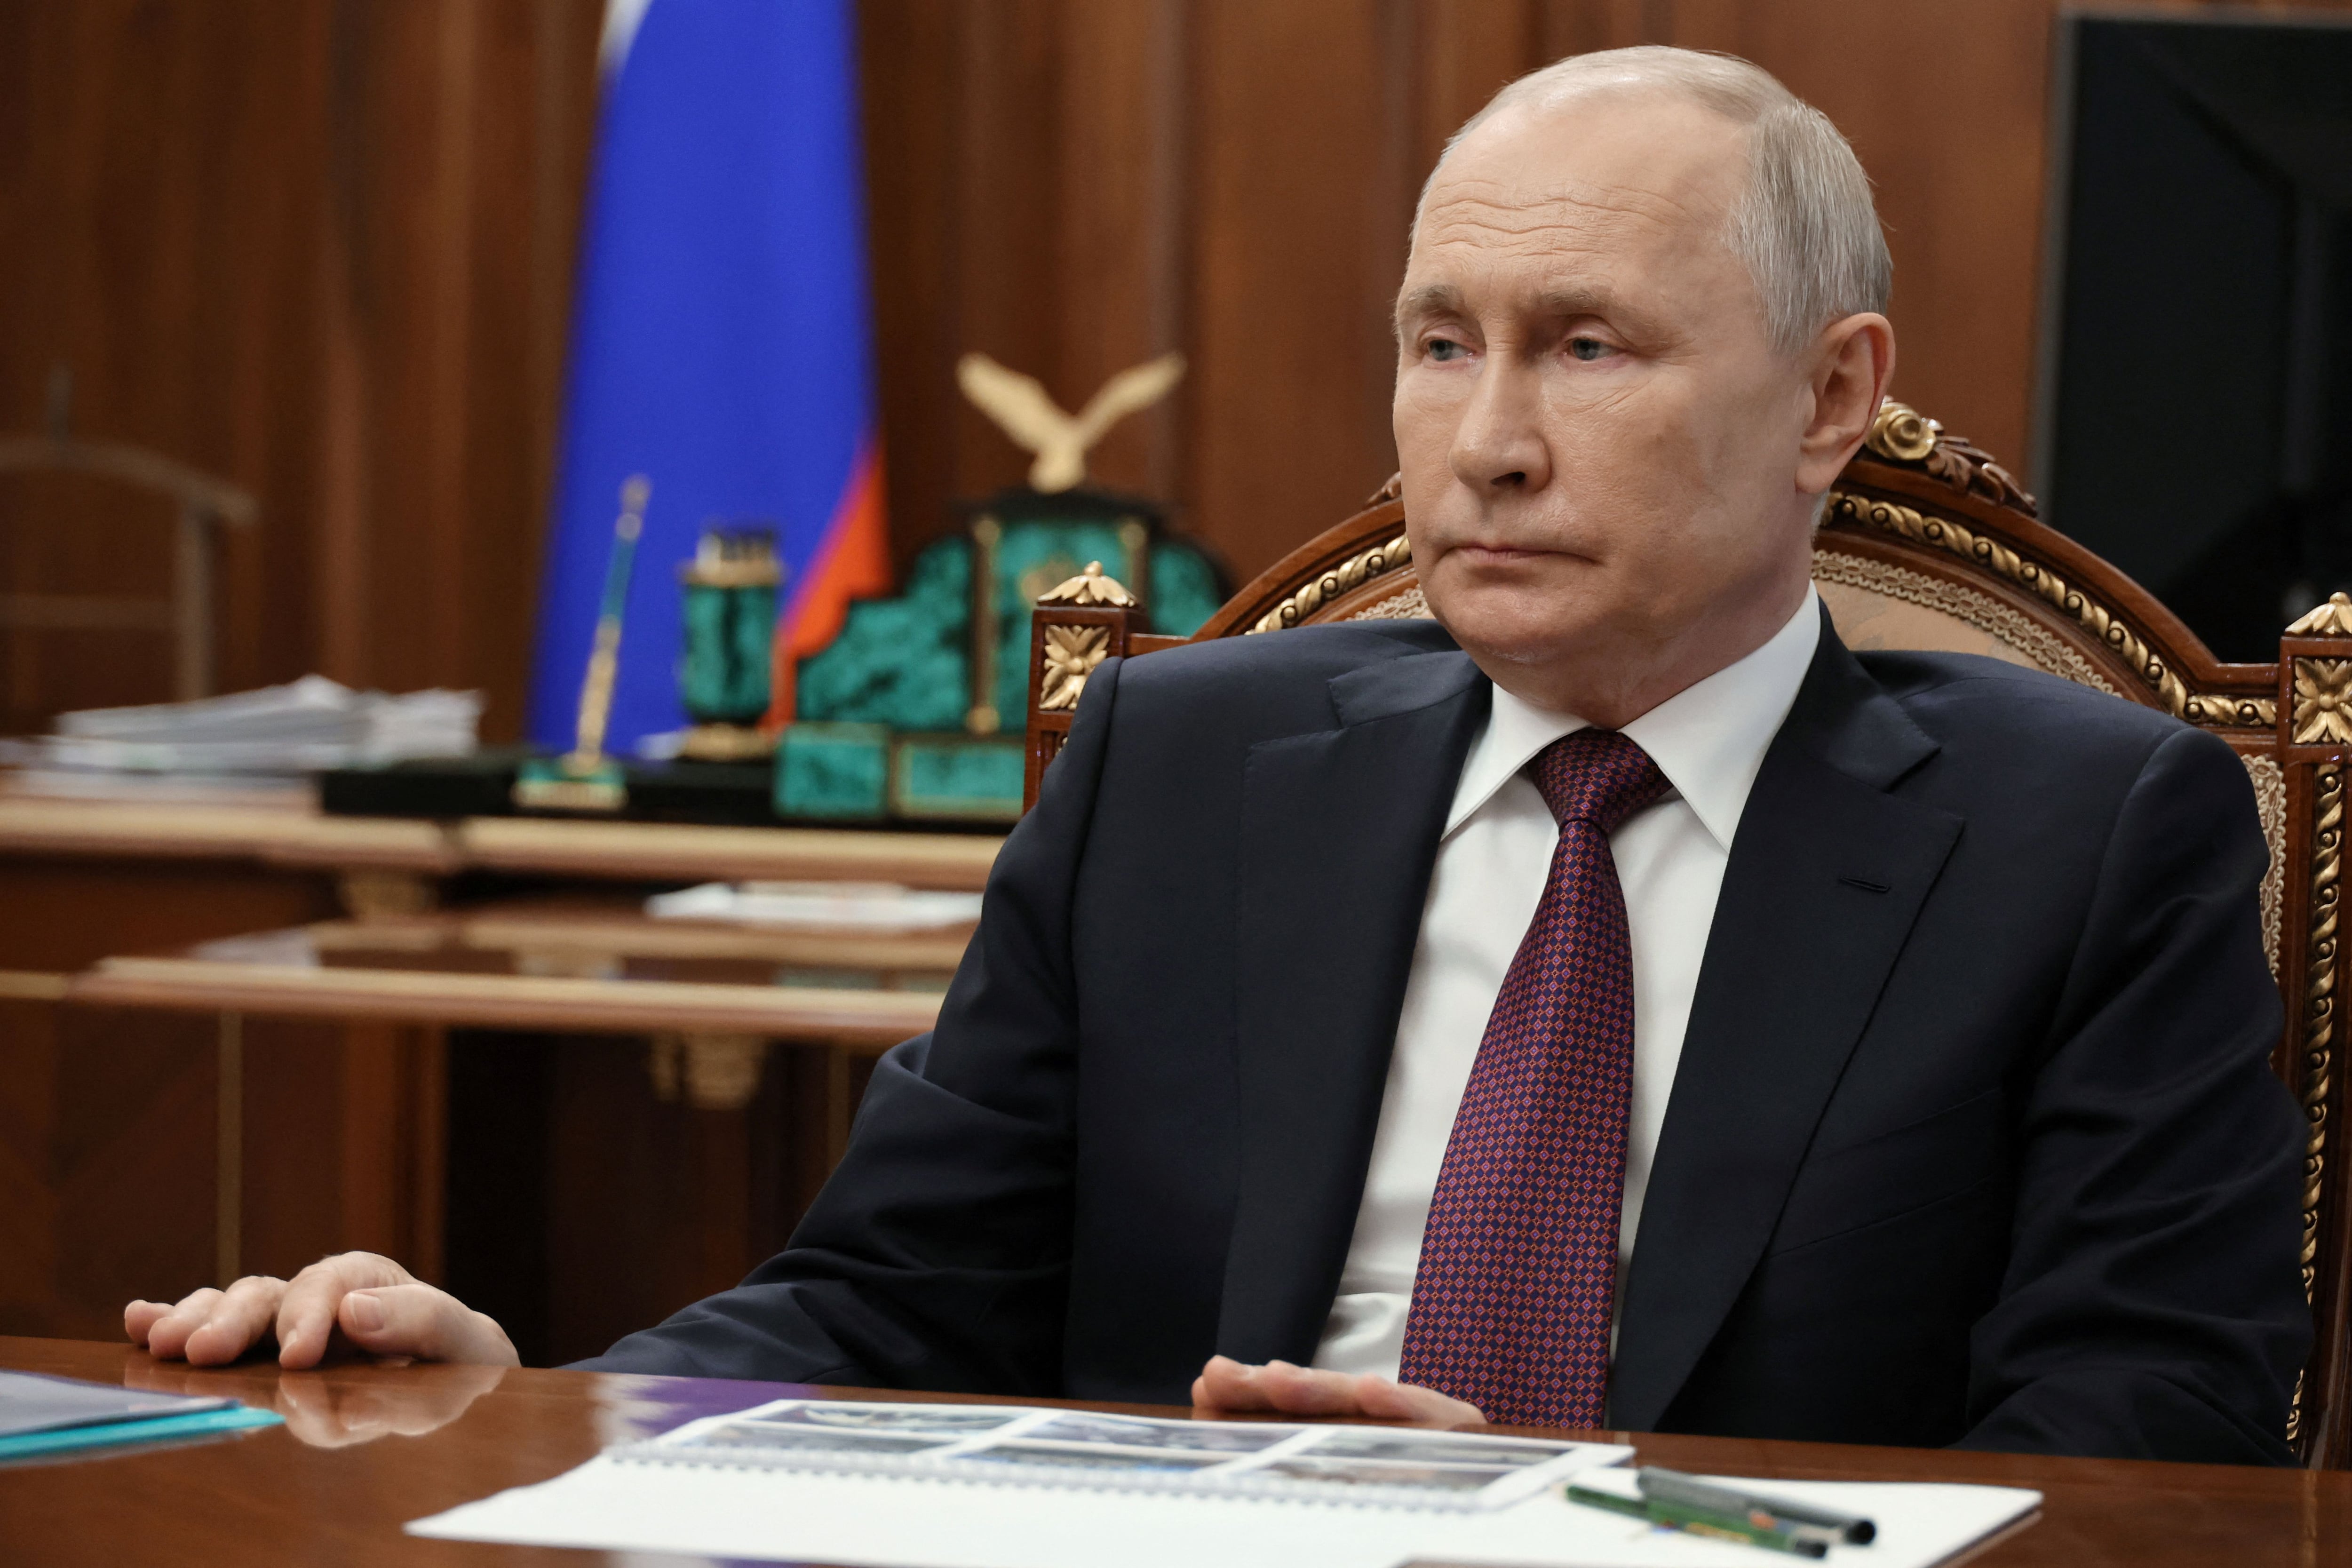 Putin lamentó lo ocurrido y dijo que Prigozhin era un hombre “talentoso” que cometió “errores” (REUTERS)